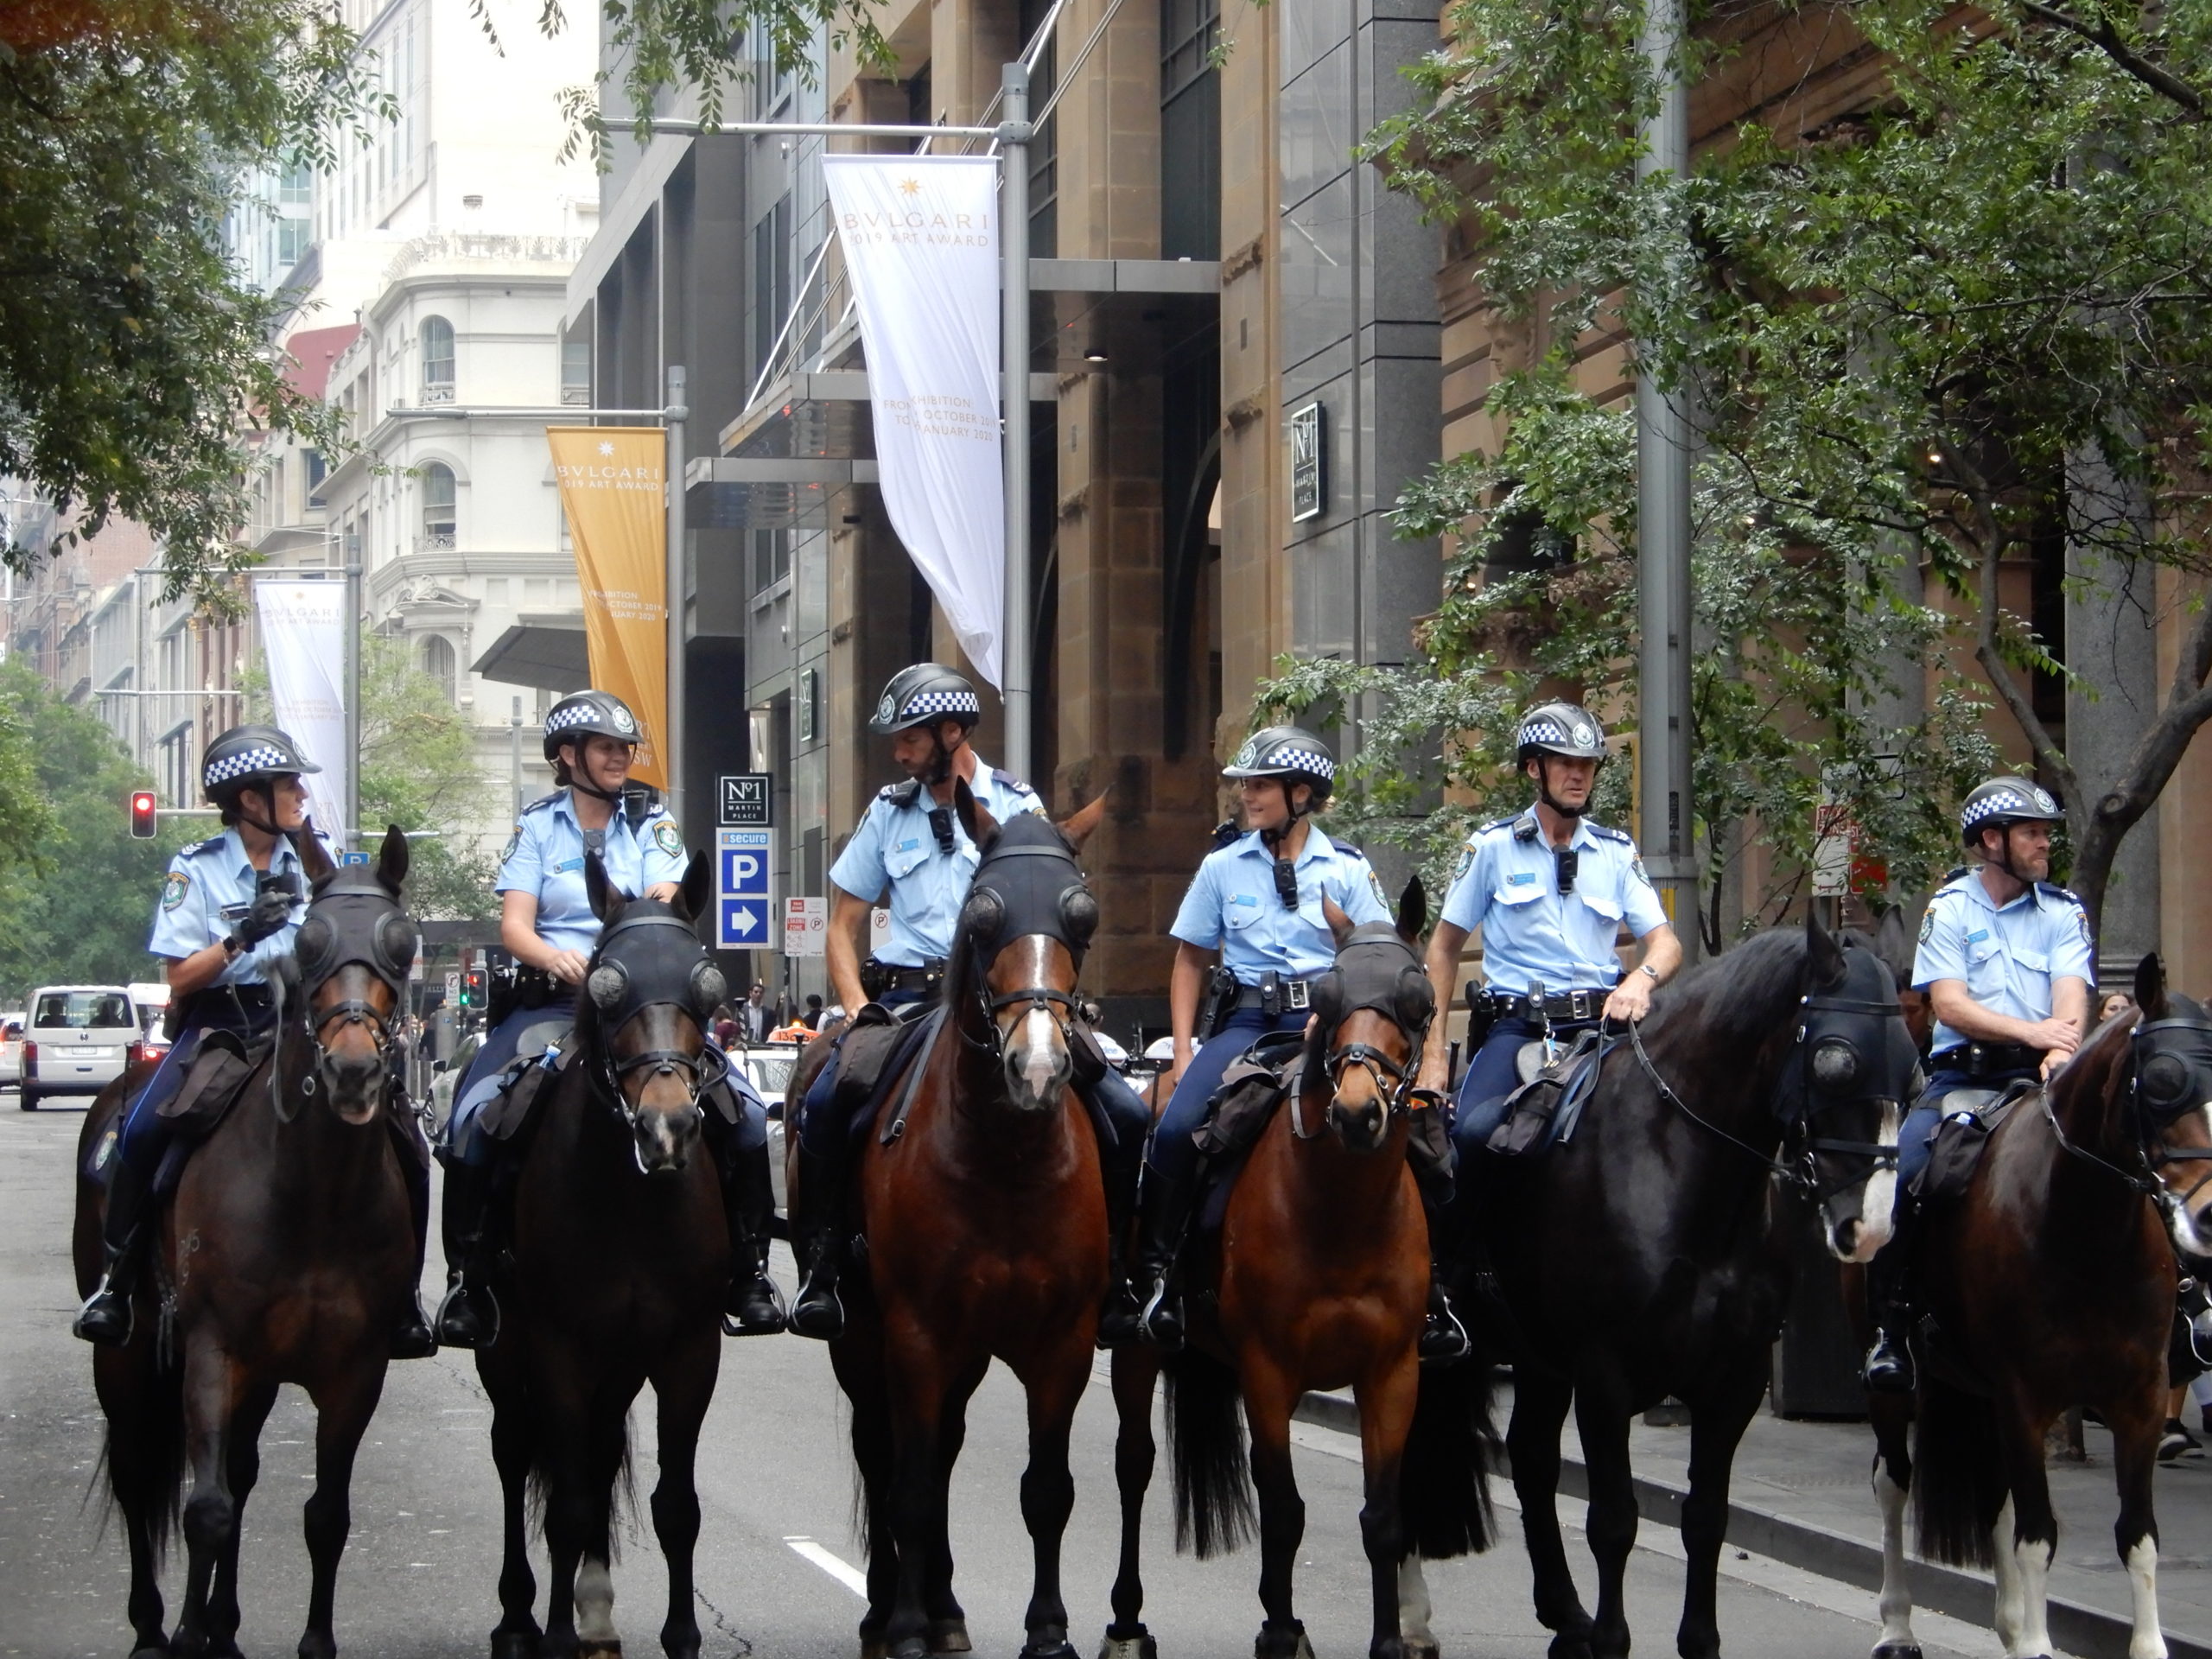 Police riding horseback